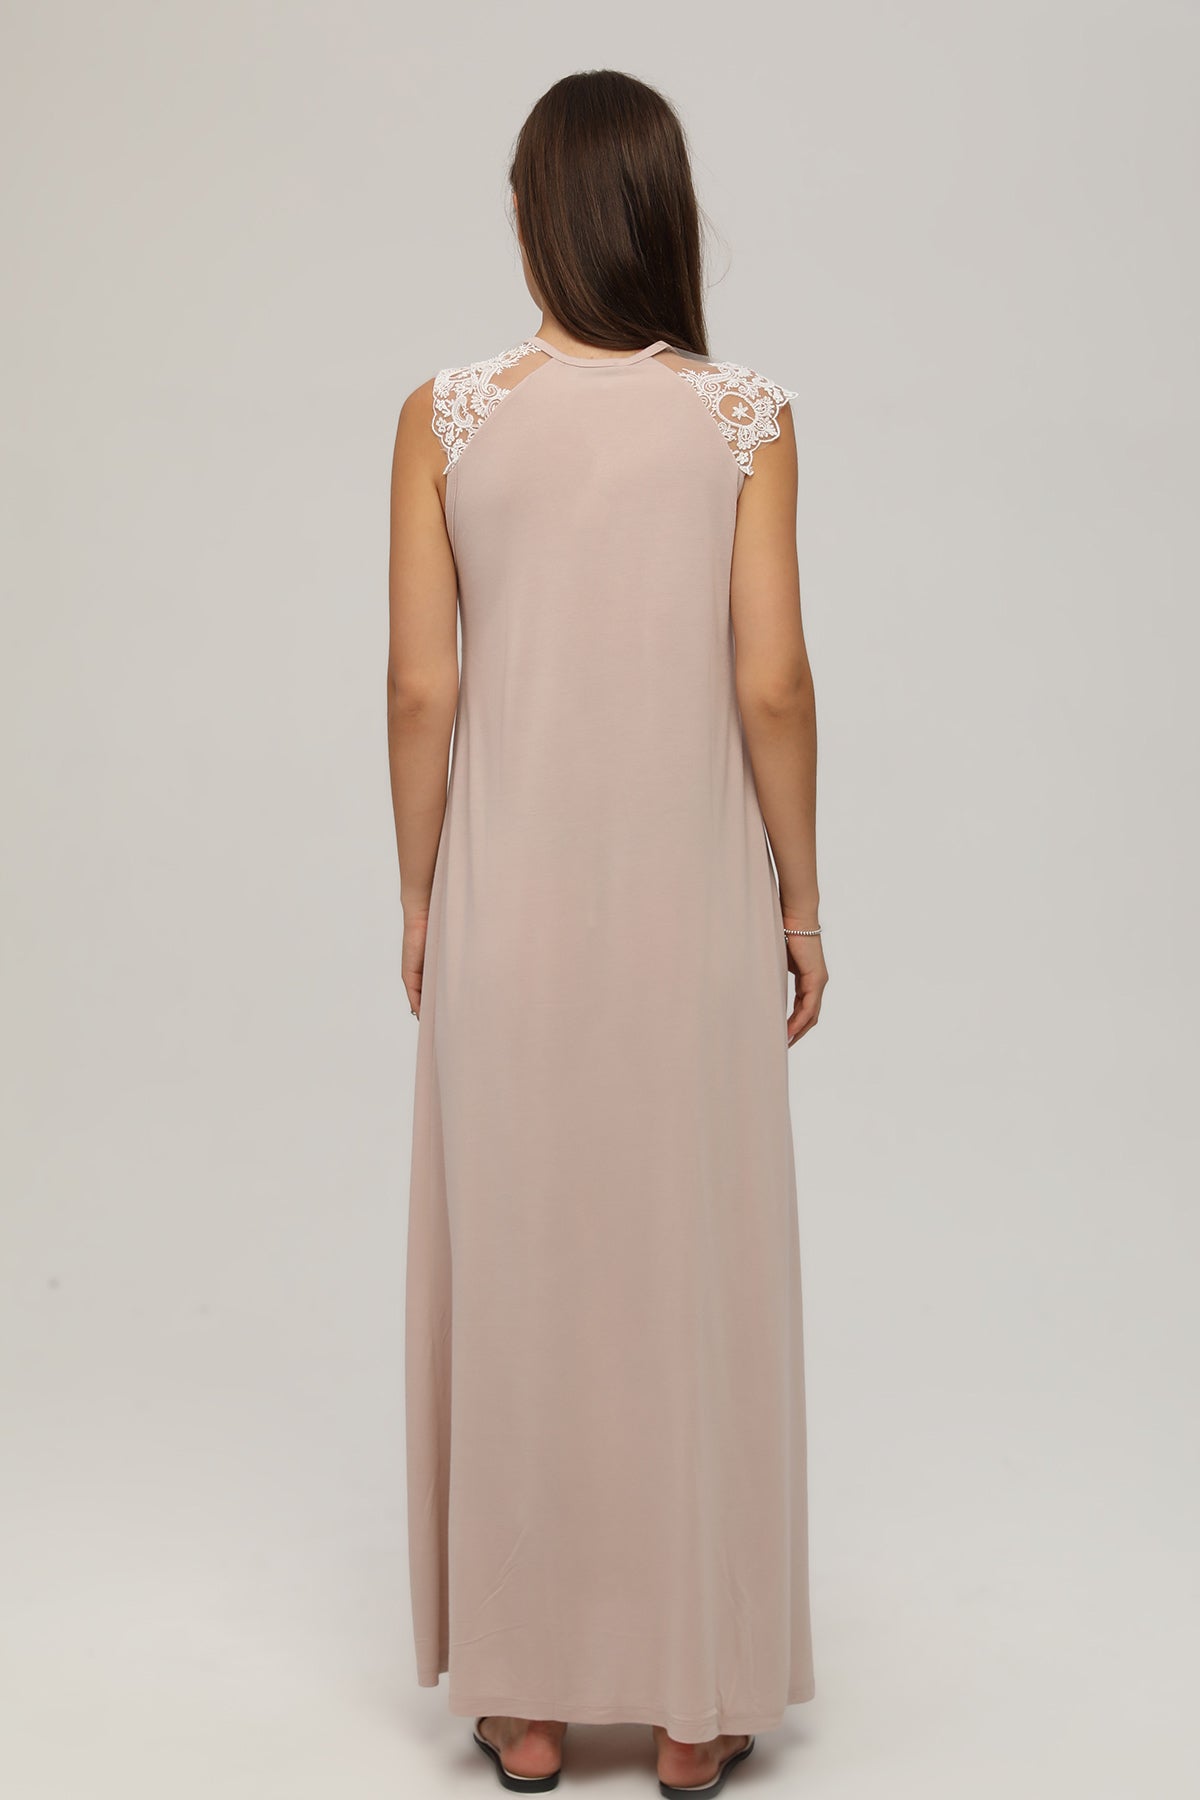 Shopymommy 107 Lace Shoulder Maternity & Nursing Nightgown Beige